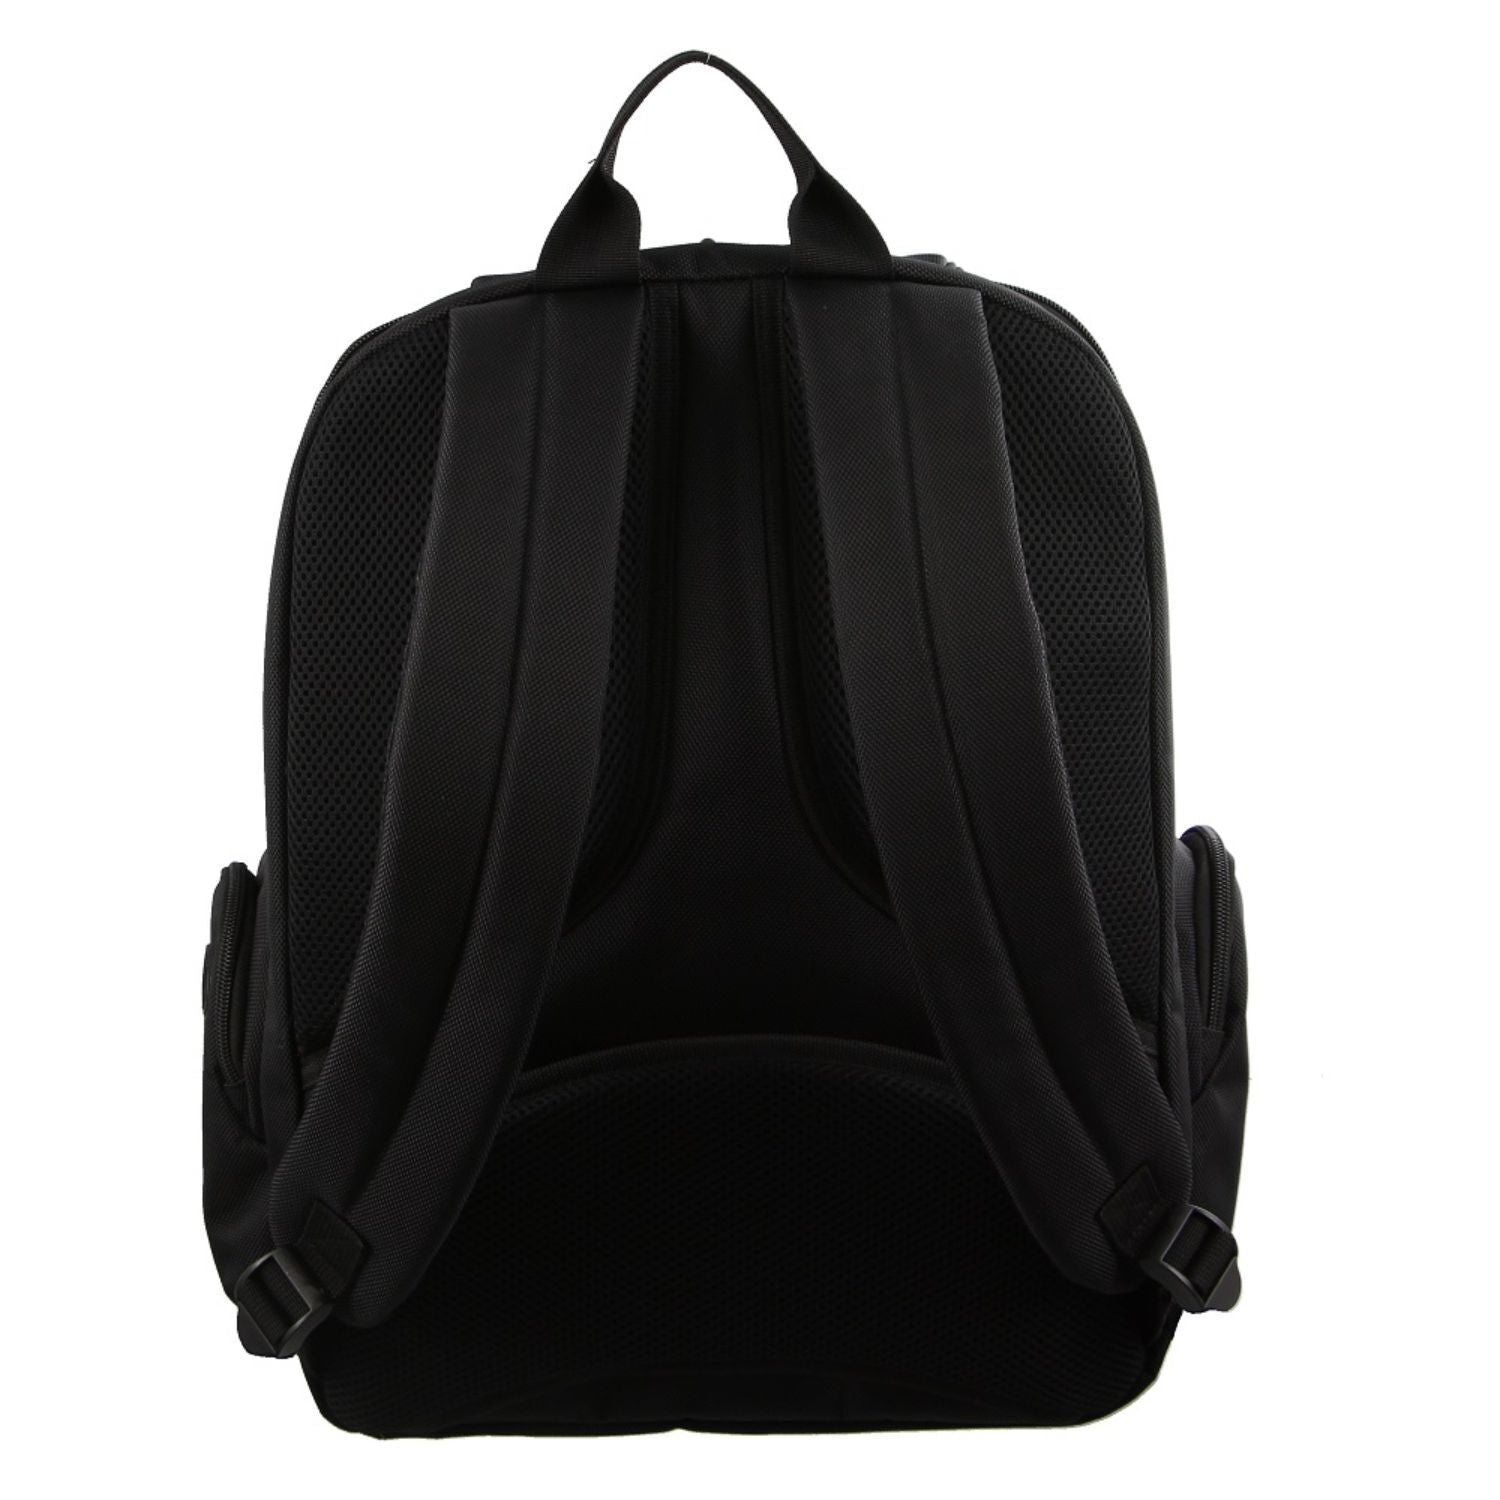 30L  Large Padded Backpack Bag w Laptop Sleeve Travel Luggage - Black